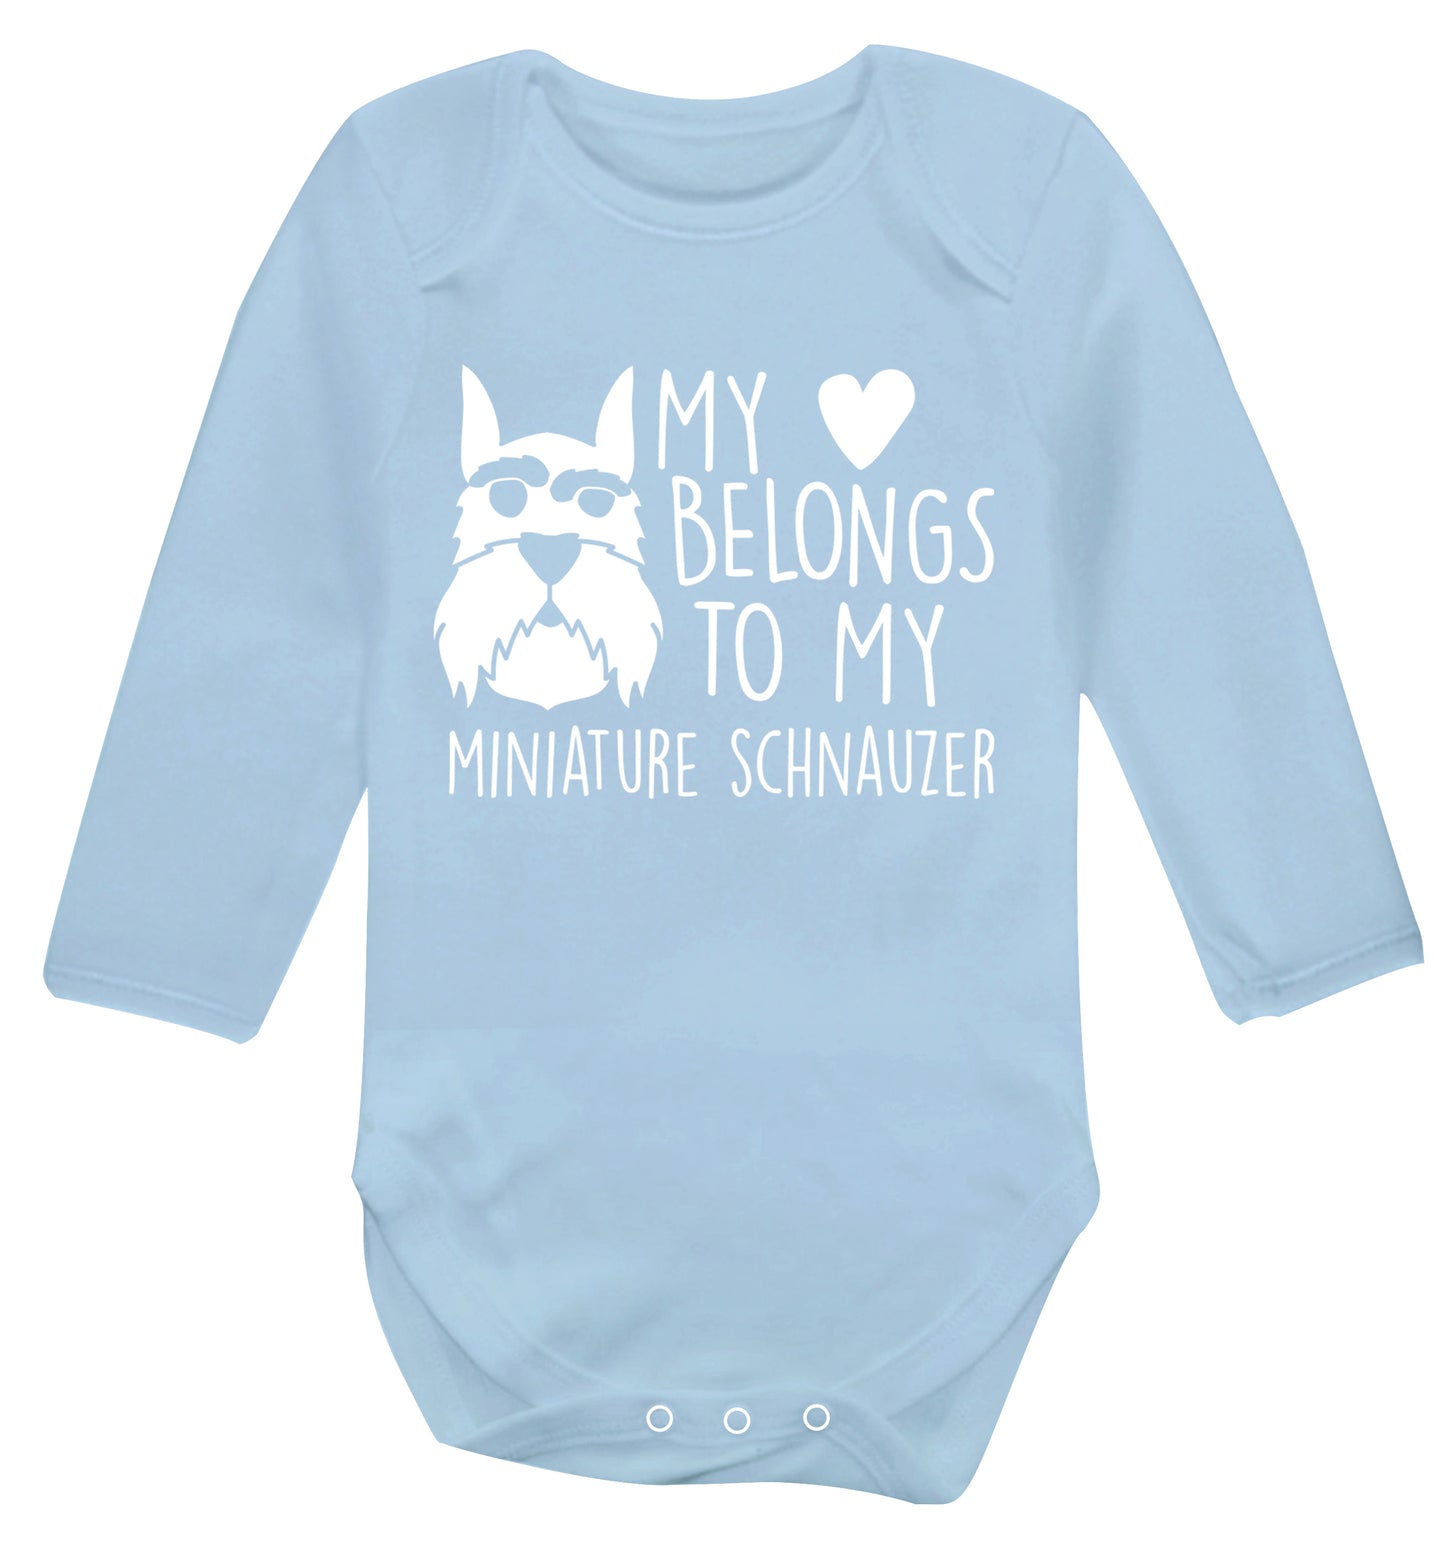 My heart belongs to my miniature schnauzer Baby Vest long sleeved pale blue 6-12 months